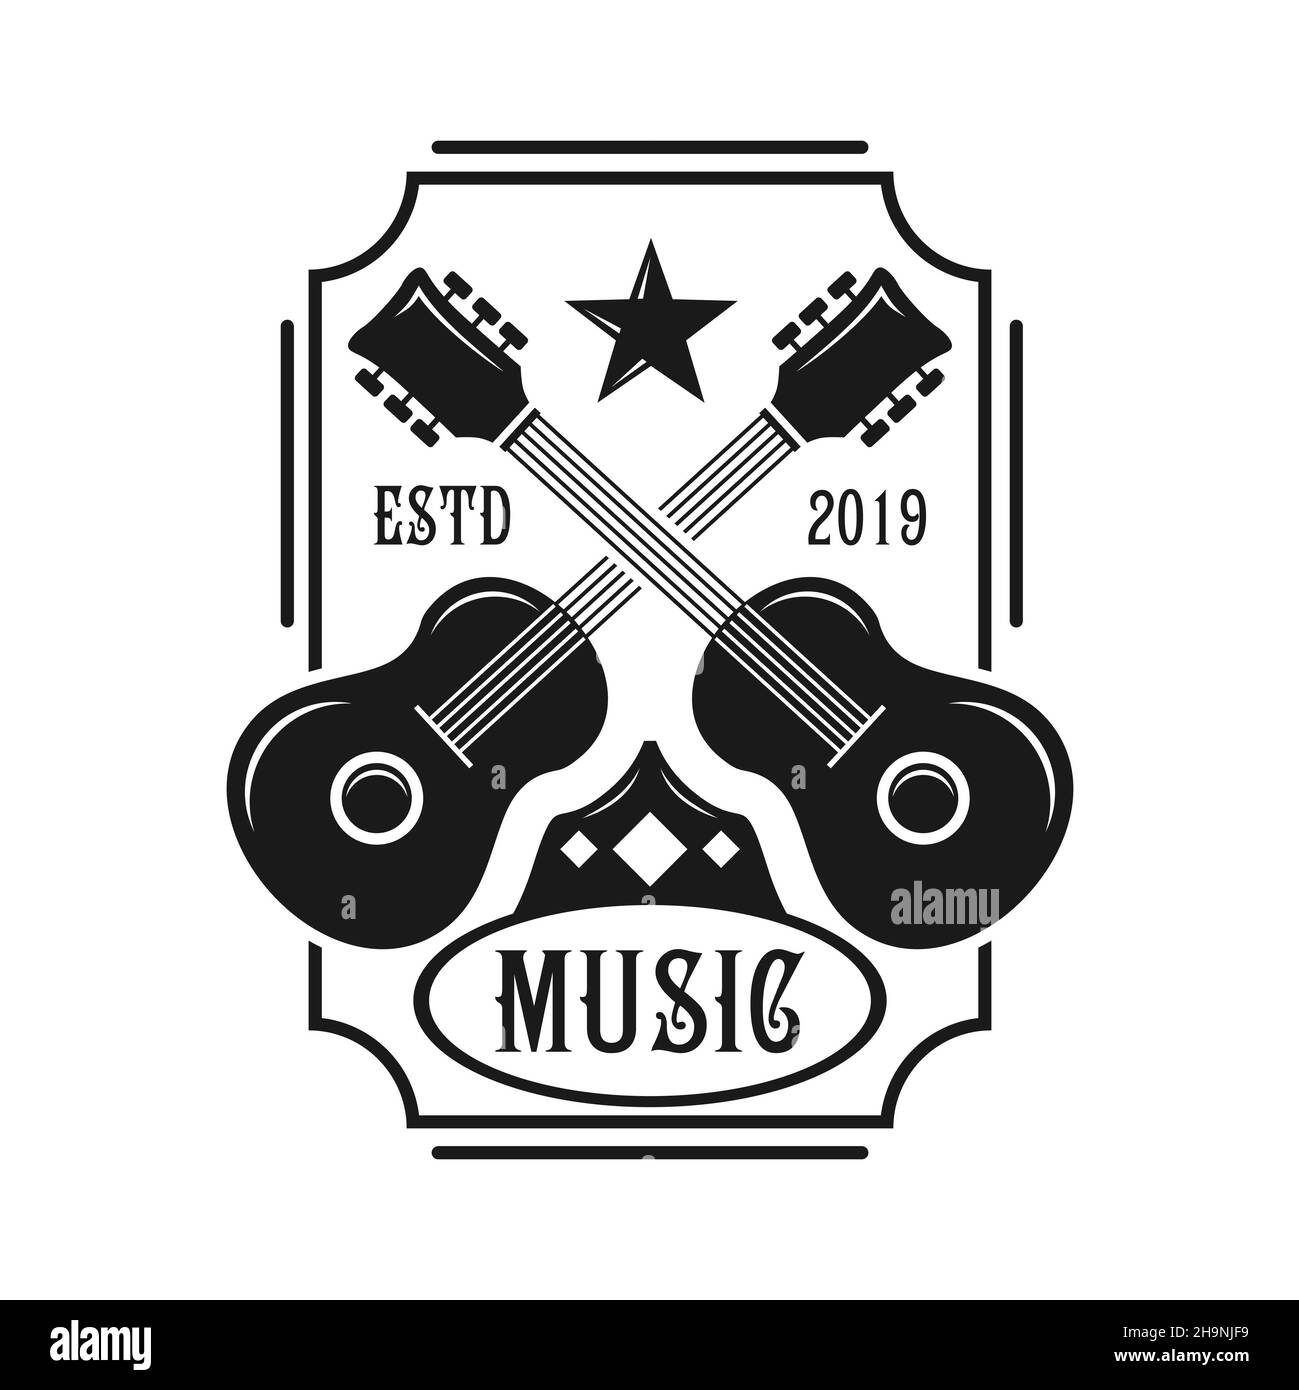 guitar emblem logo your company Stock Photo